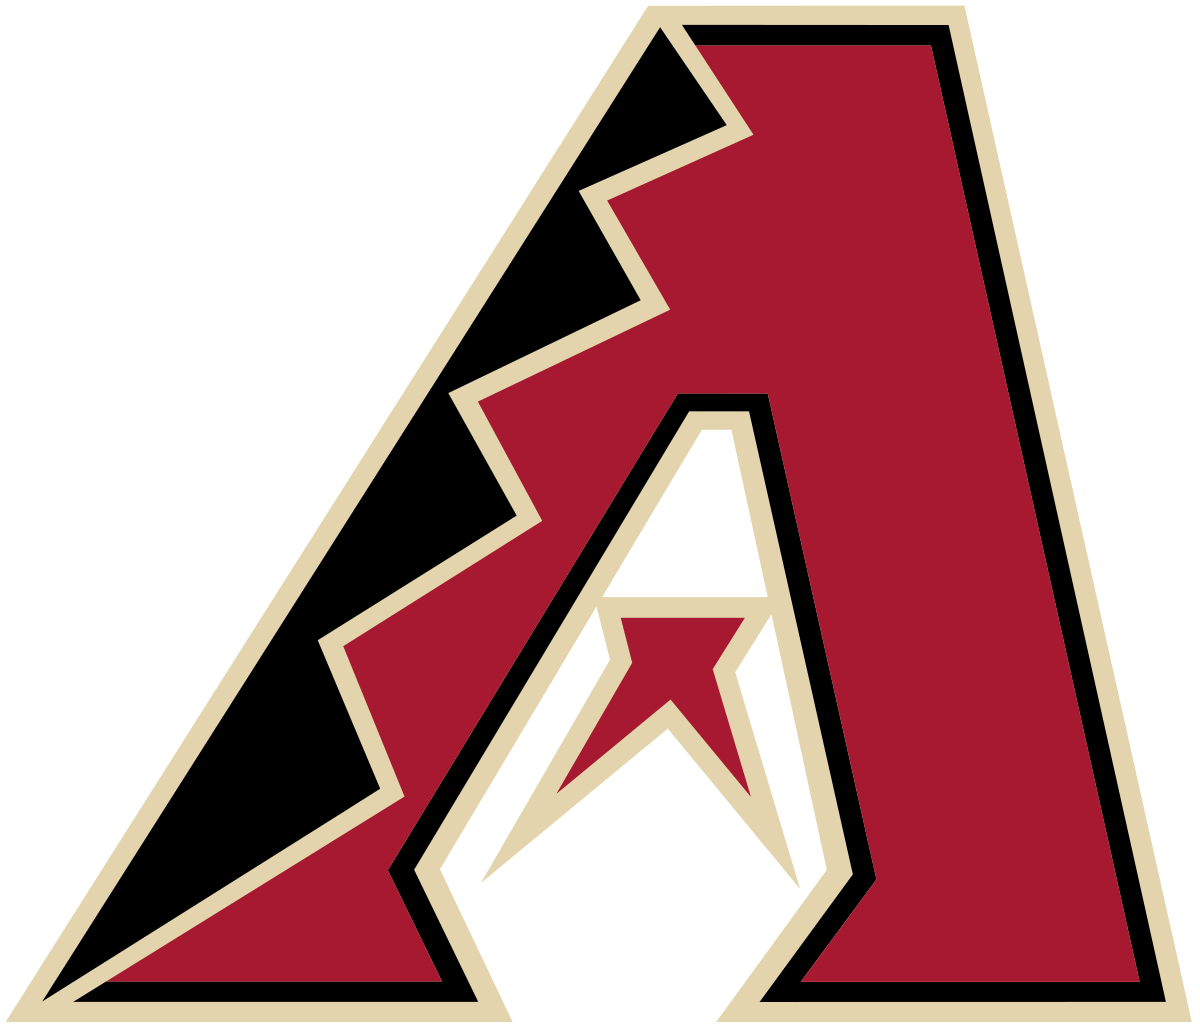 D-backs Logo - Arizona Diamondbacks